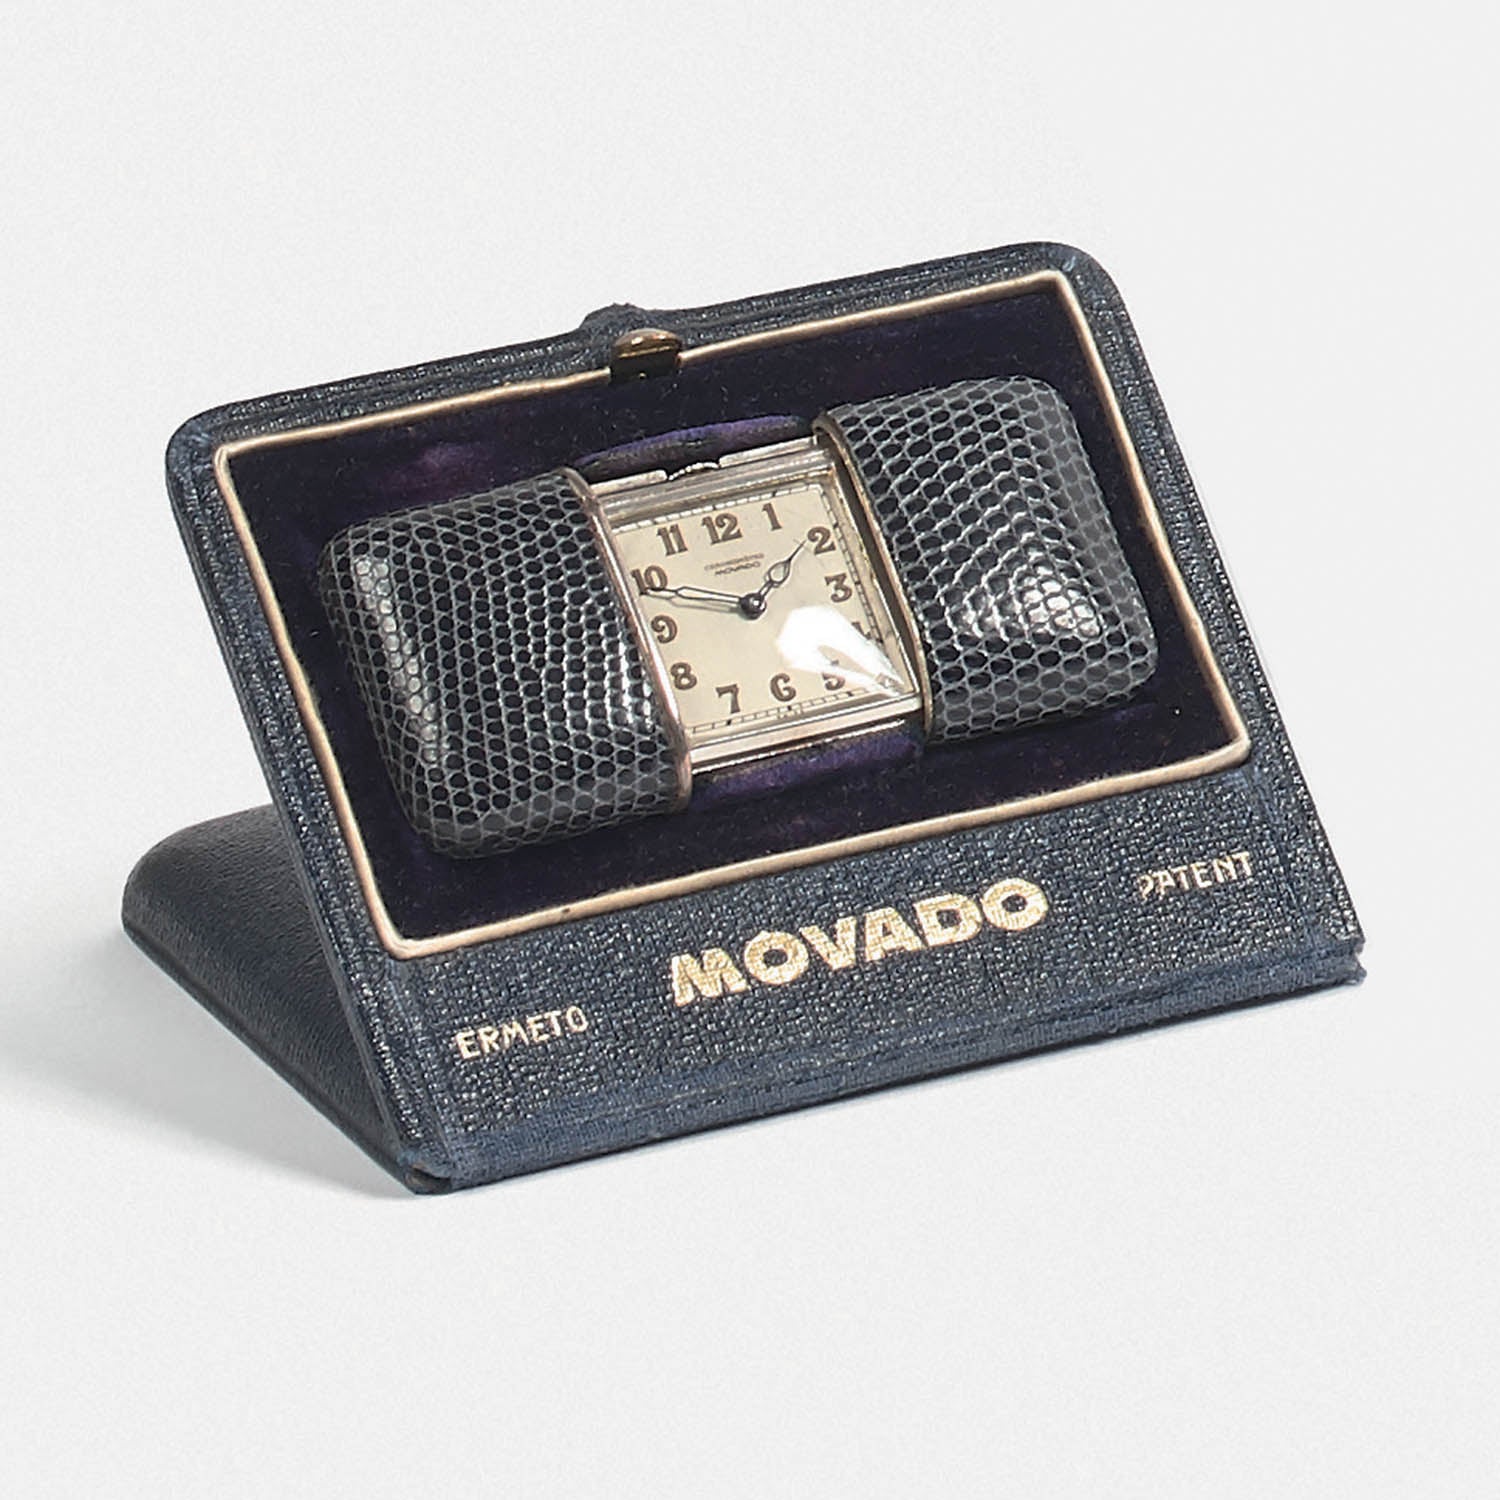 Movado Ermeto Travel and Pocket Watch